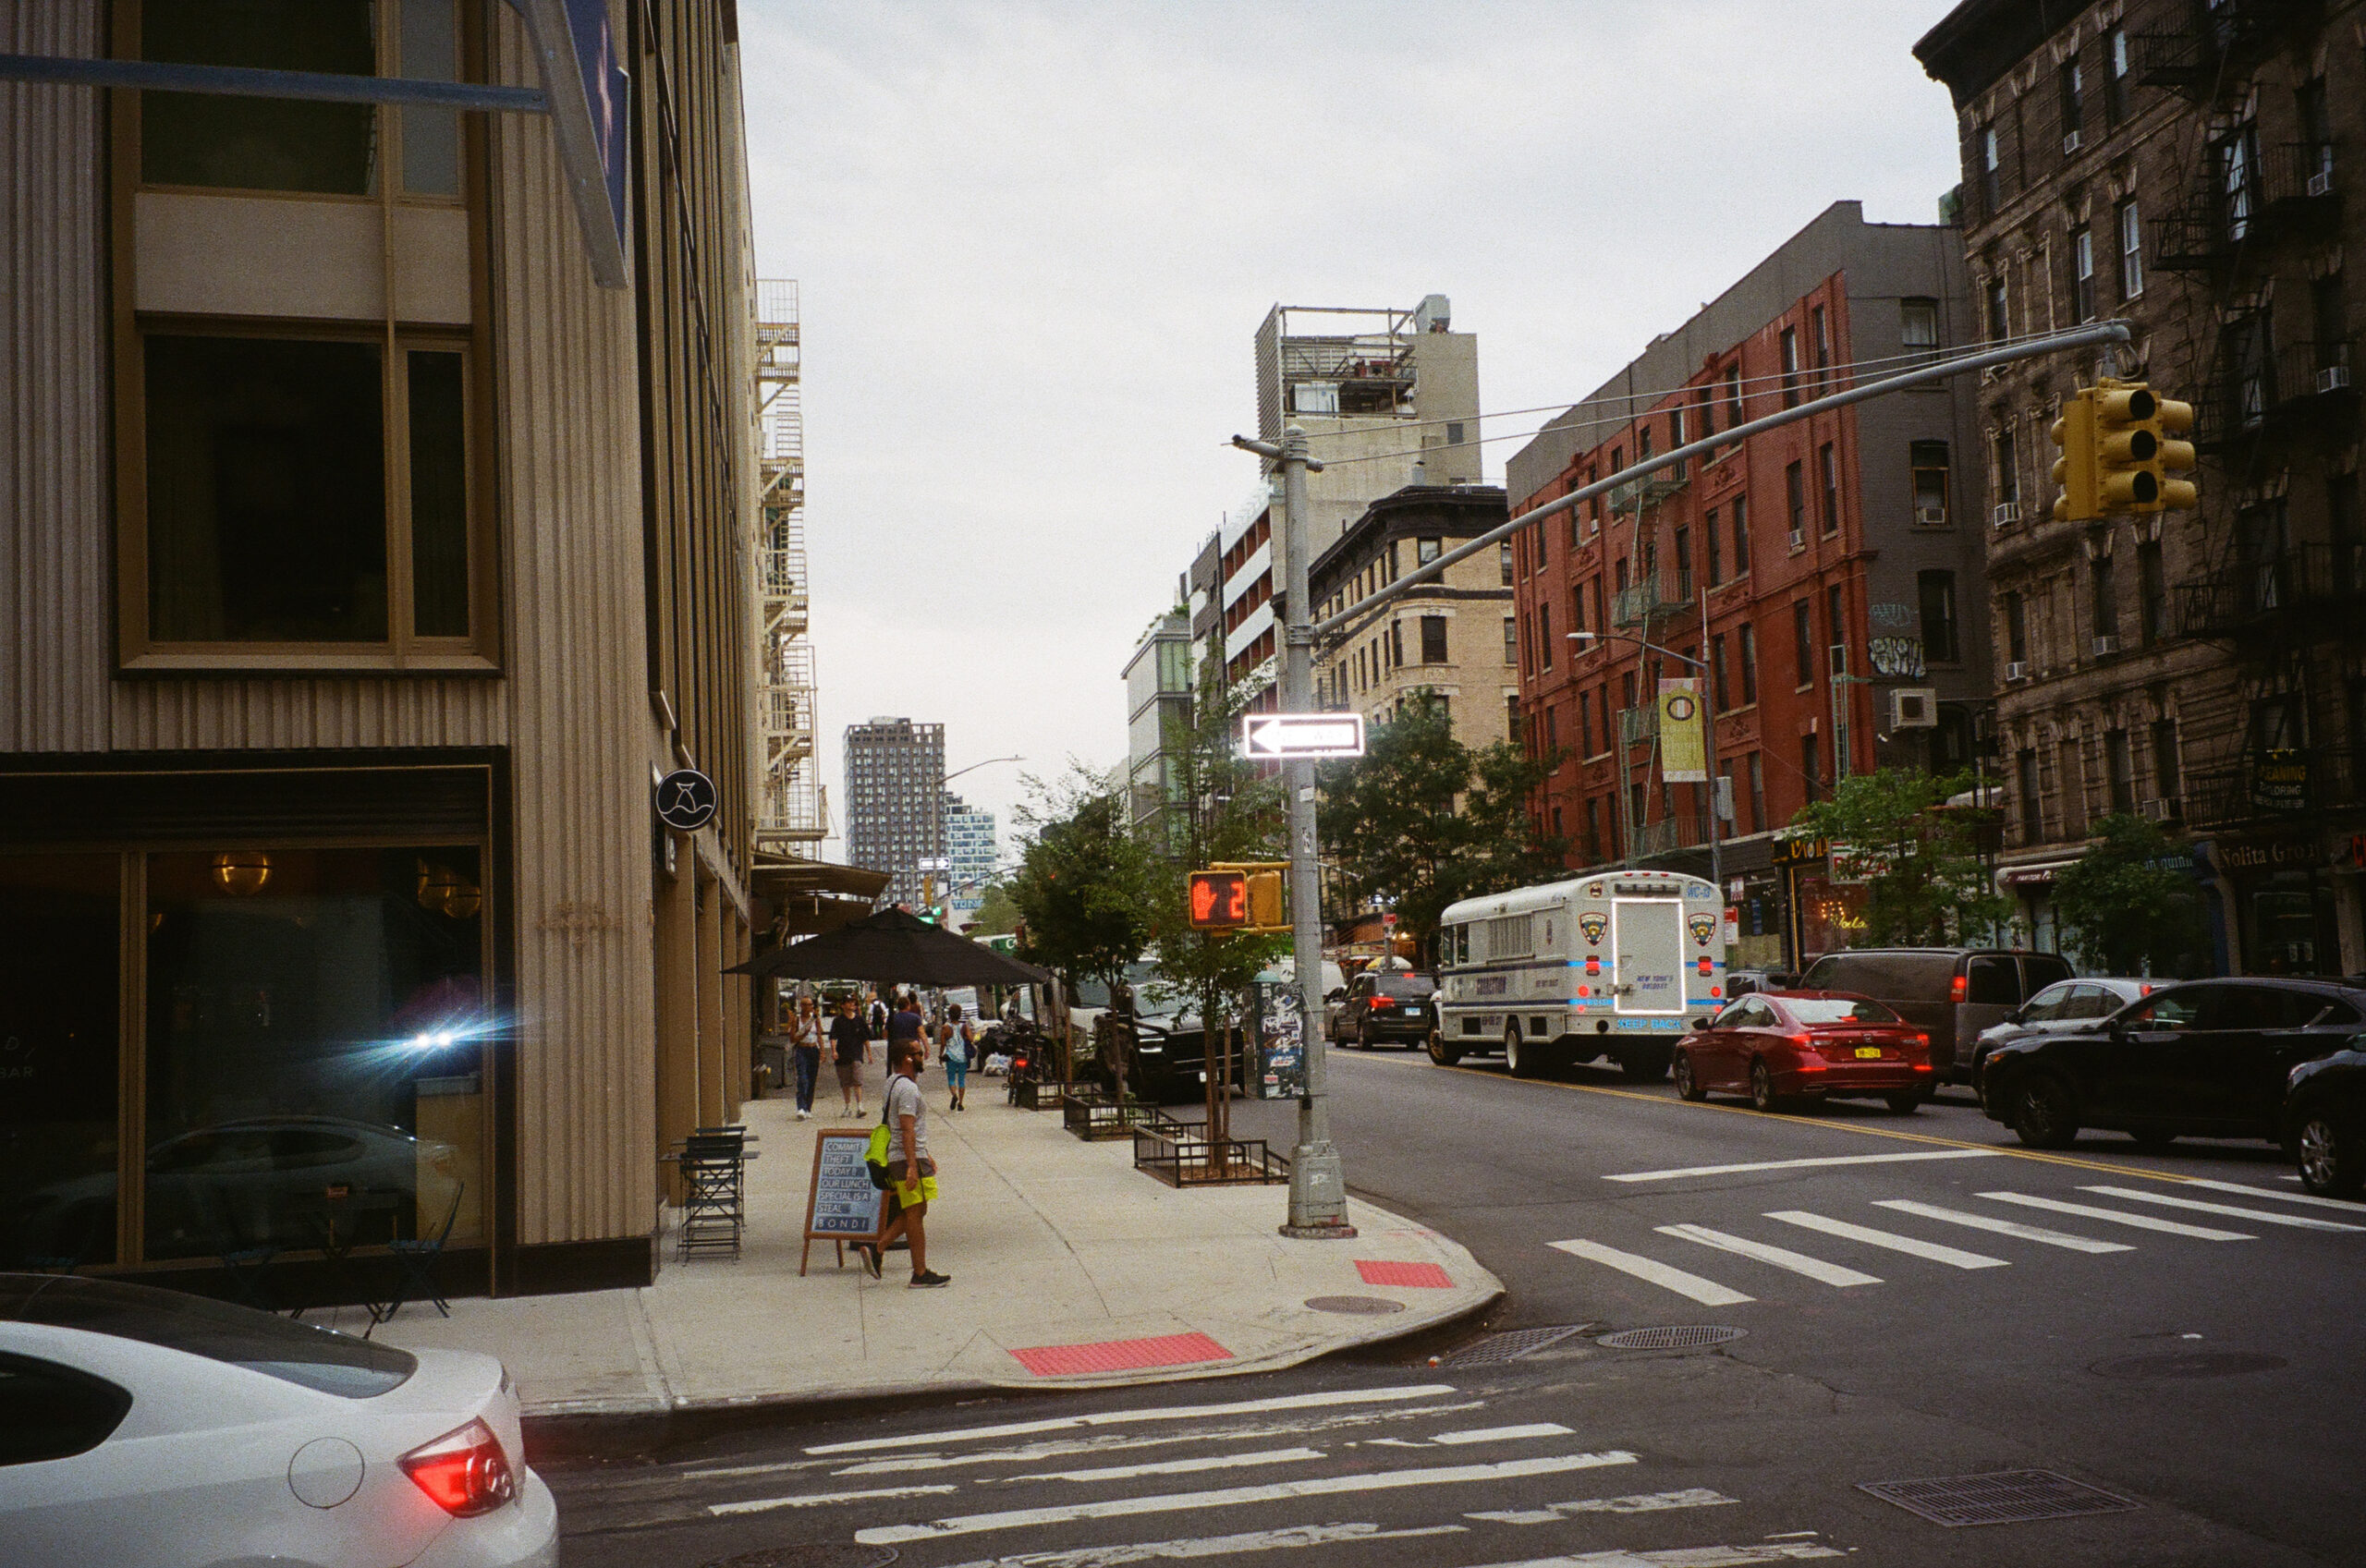 A street corner in the East Village